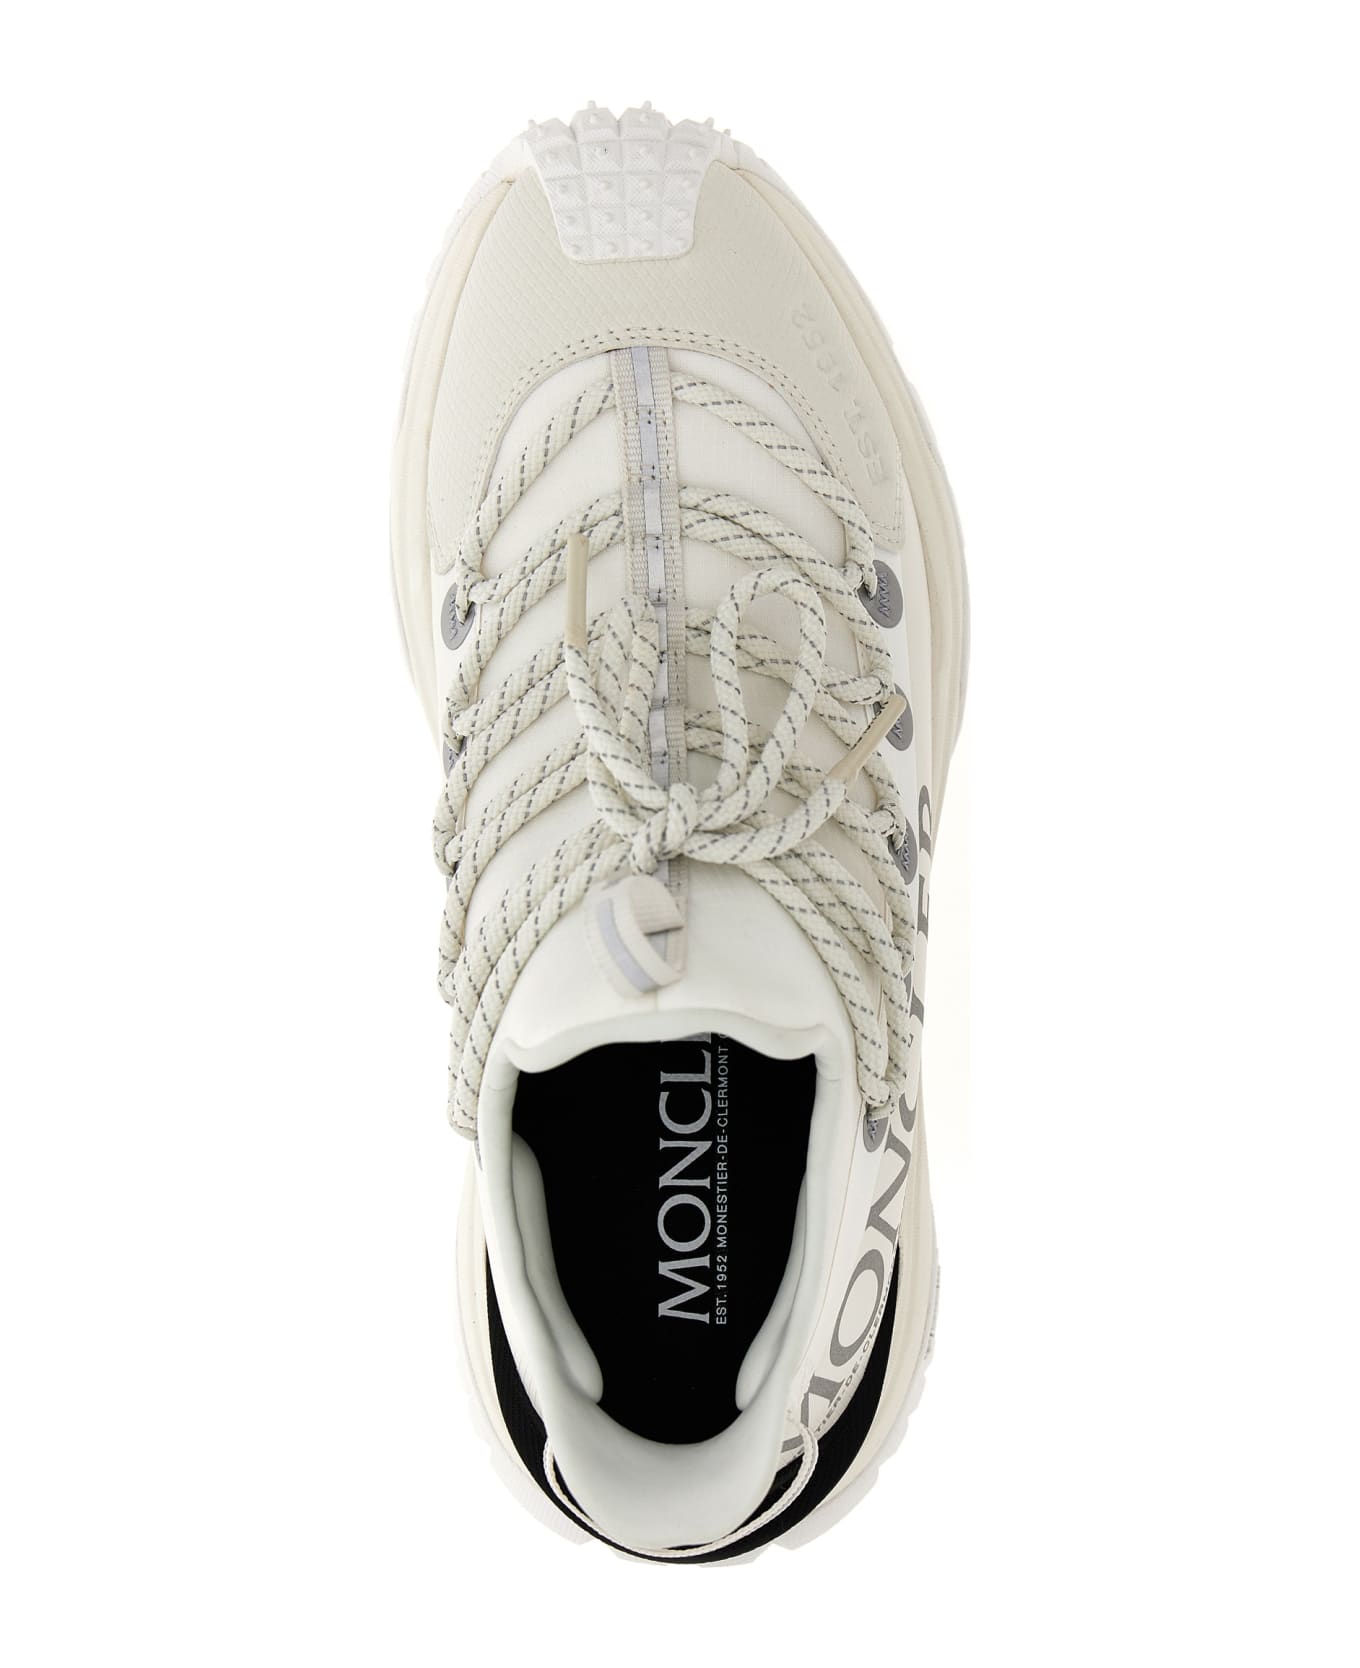 Moncler 'trailgrip Lite 2' Sneakers - White